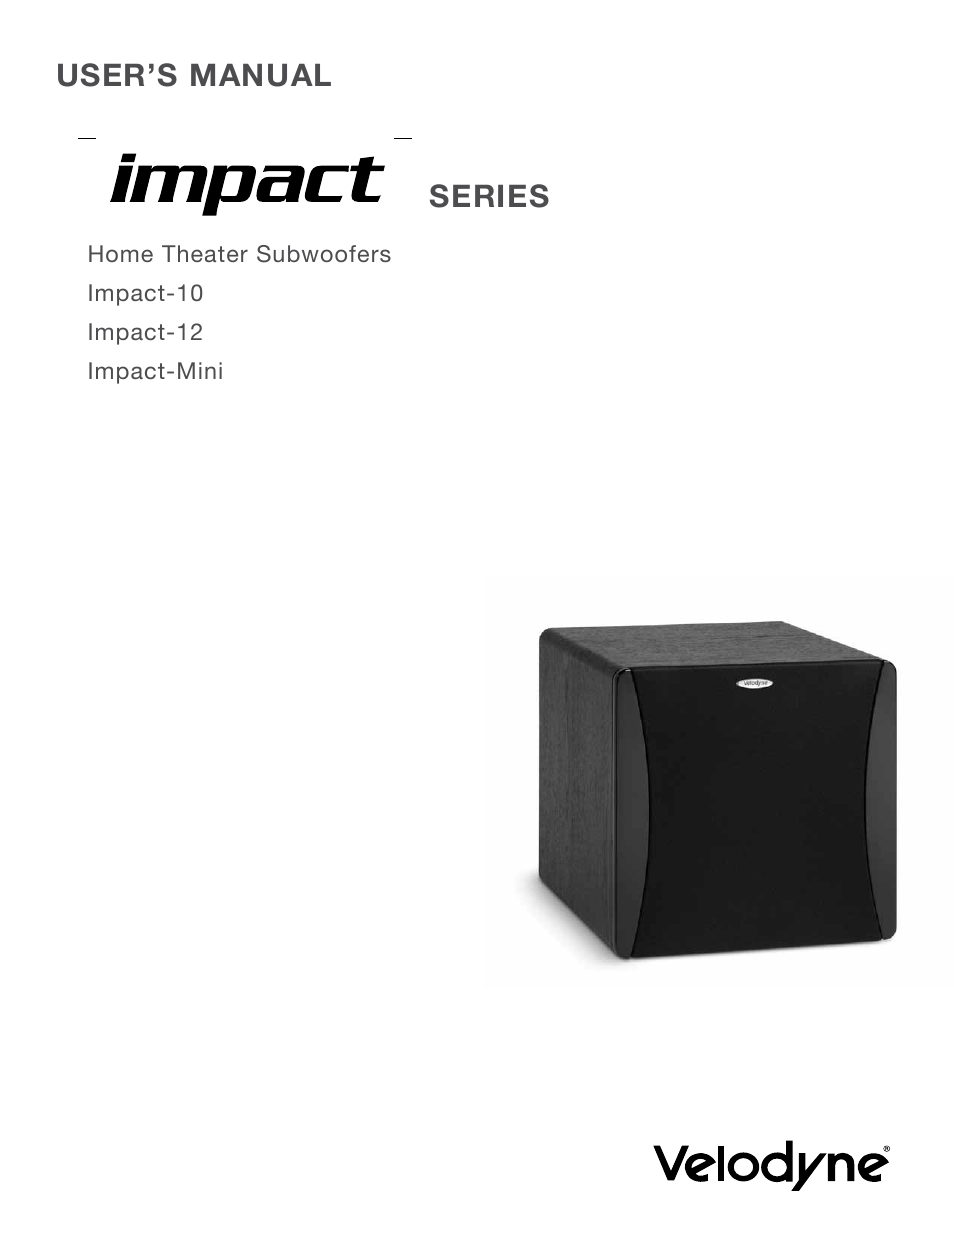 Impact Series